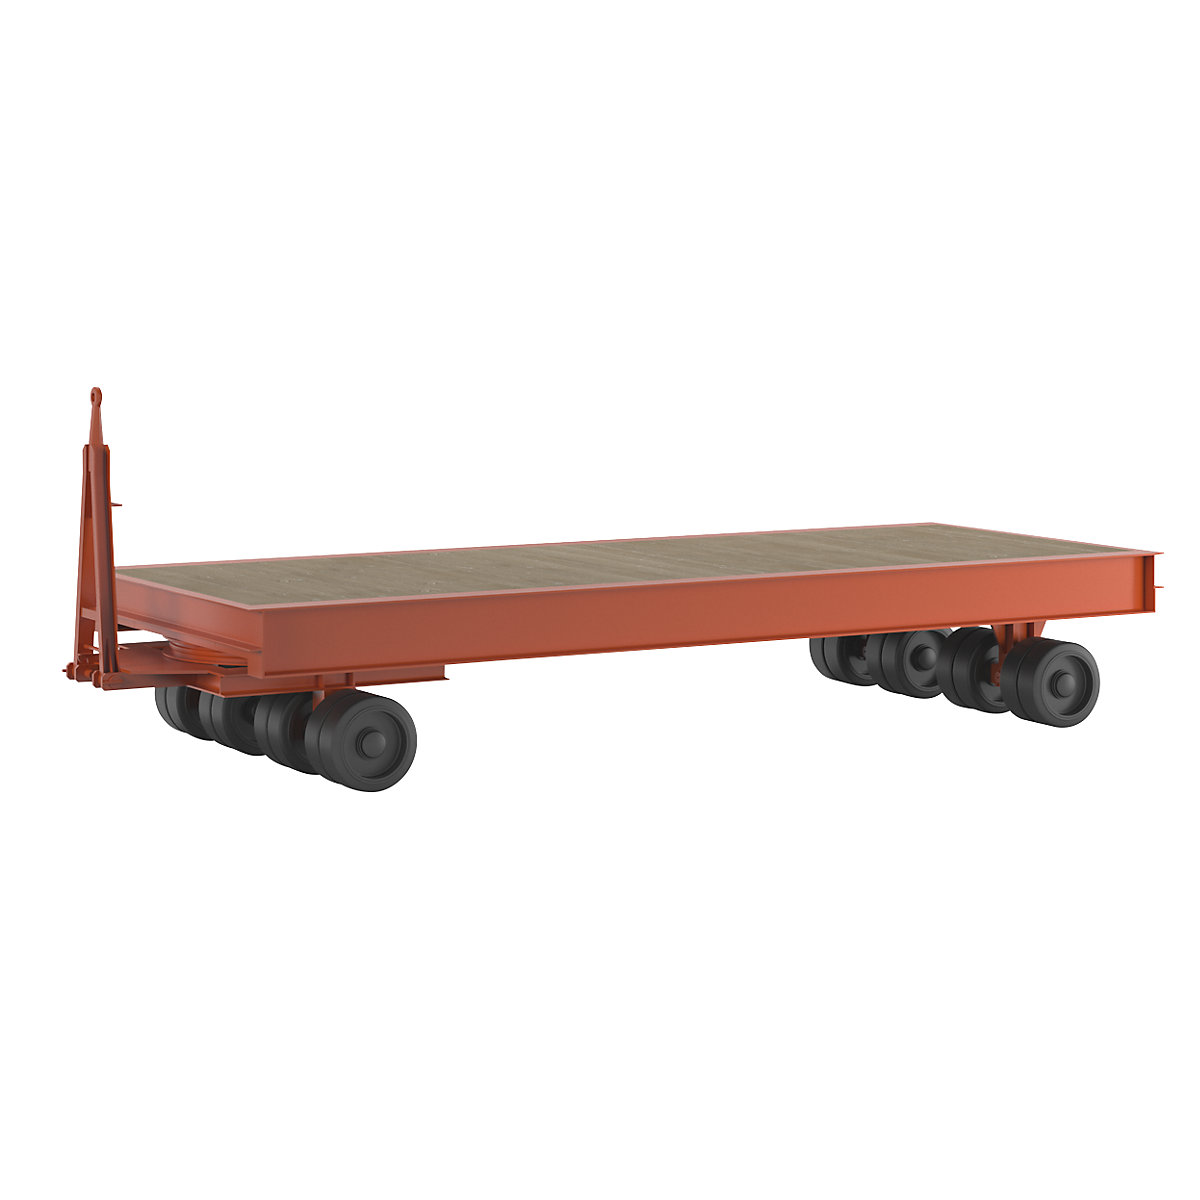 Heavy goods trailer, 32 t, turntable steering, platform 5.0 x 2.0 m-12